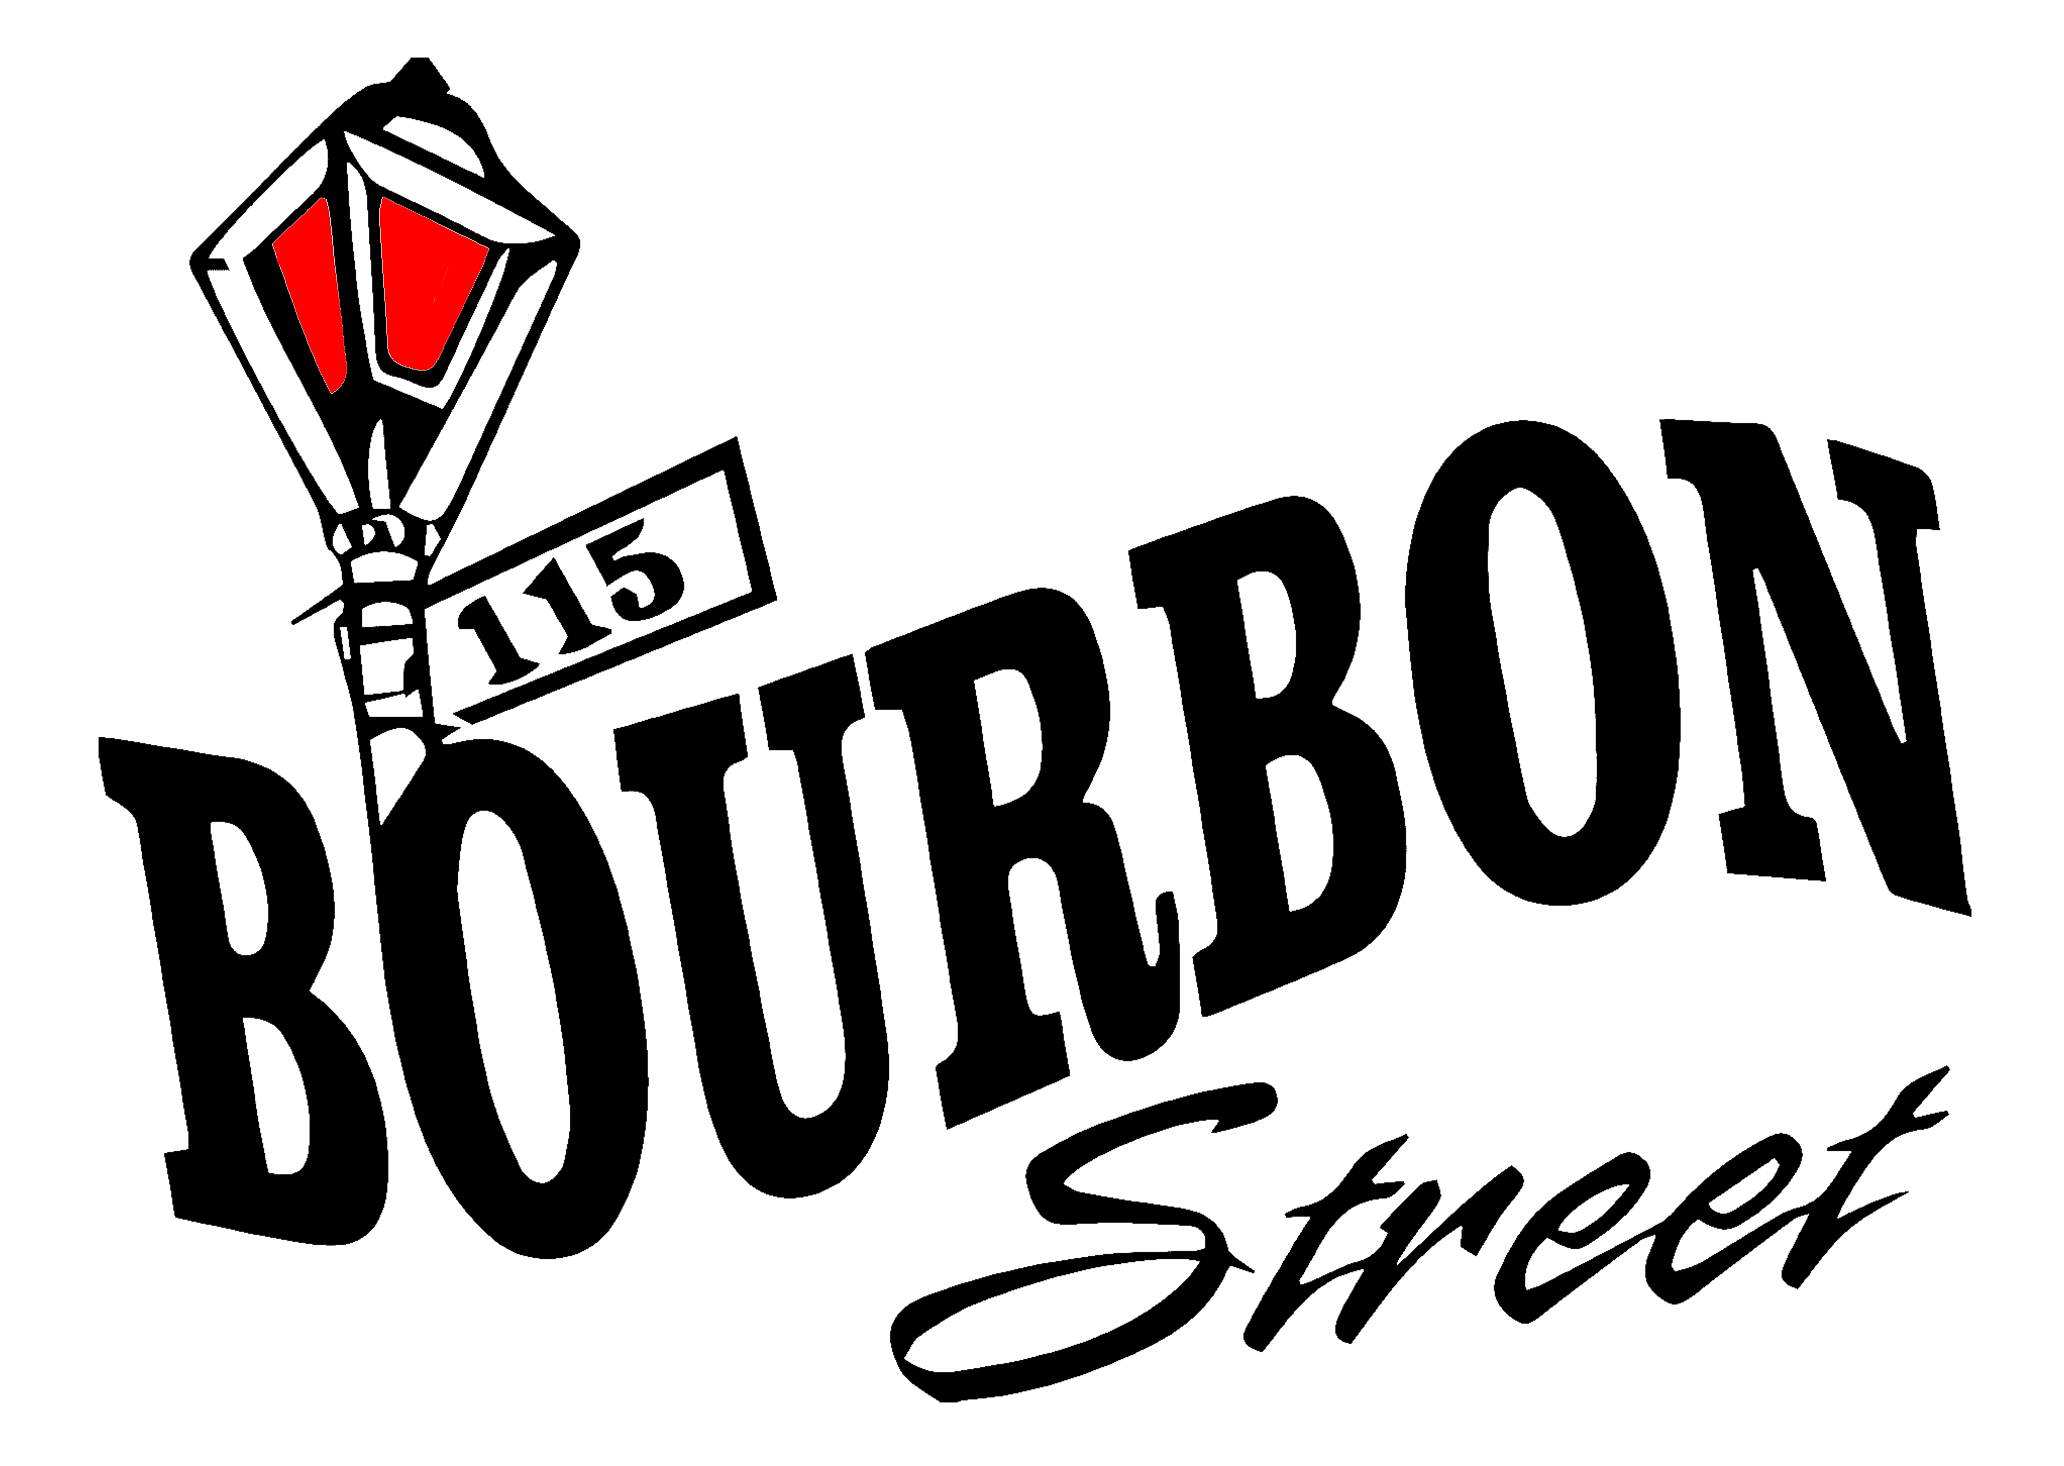 115 Bourbon Street logo with red light